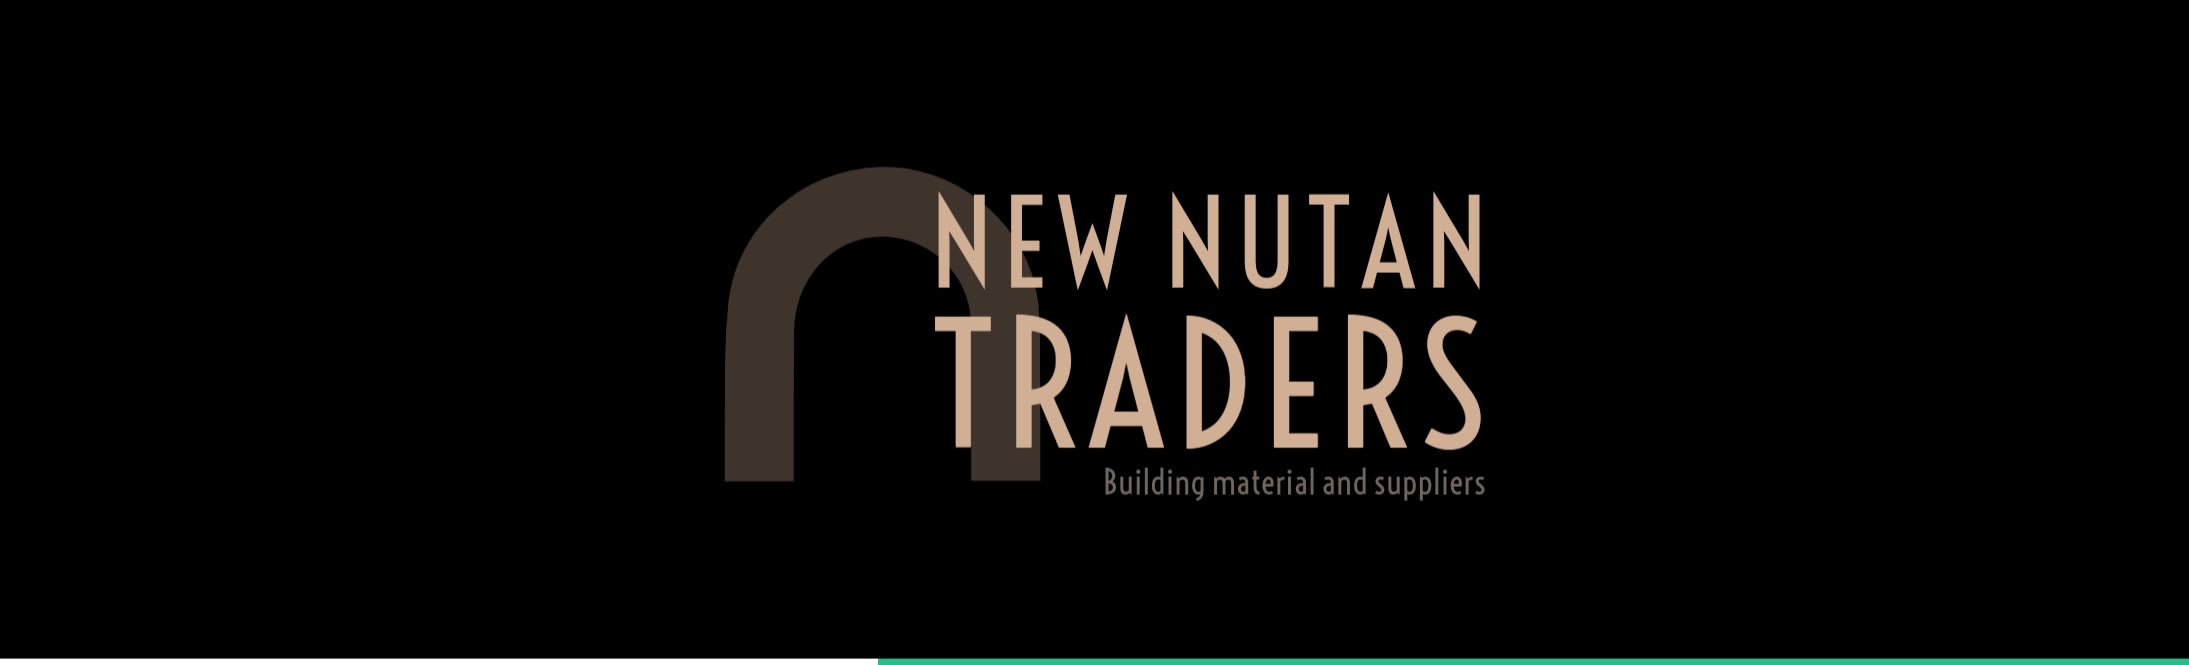 New Nutan Traders